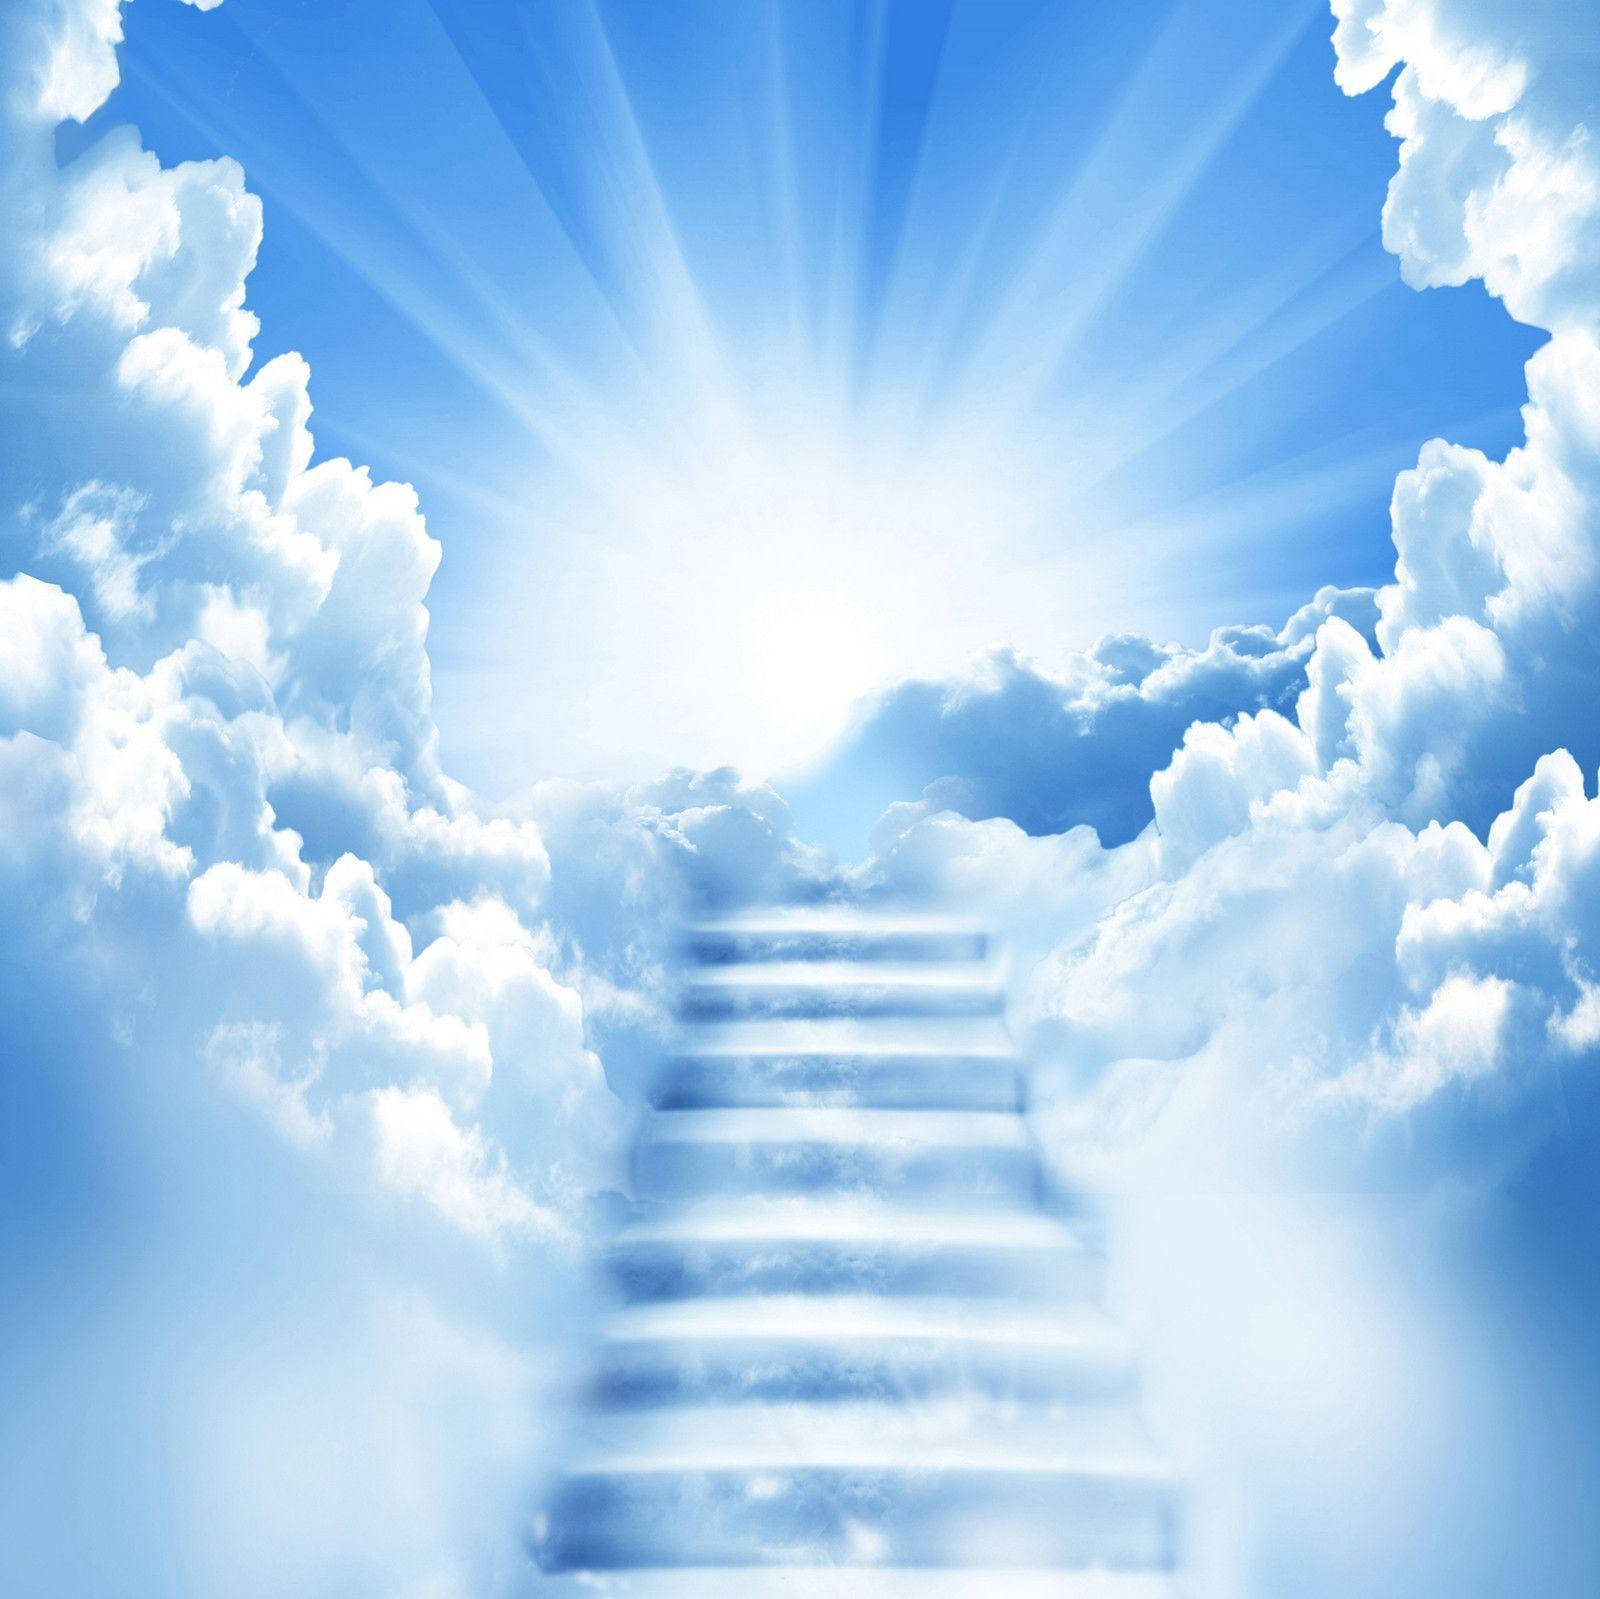 Funeral Blue Sky Stairway Background